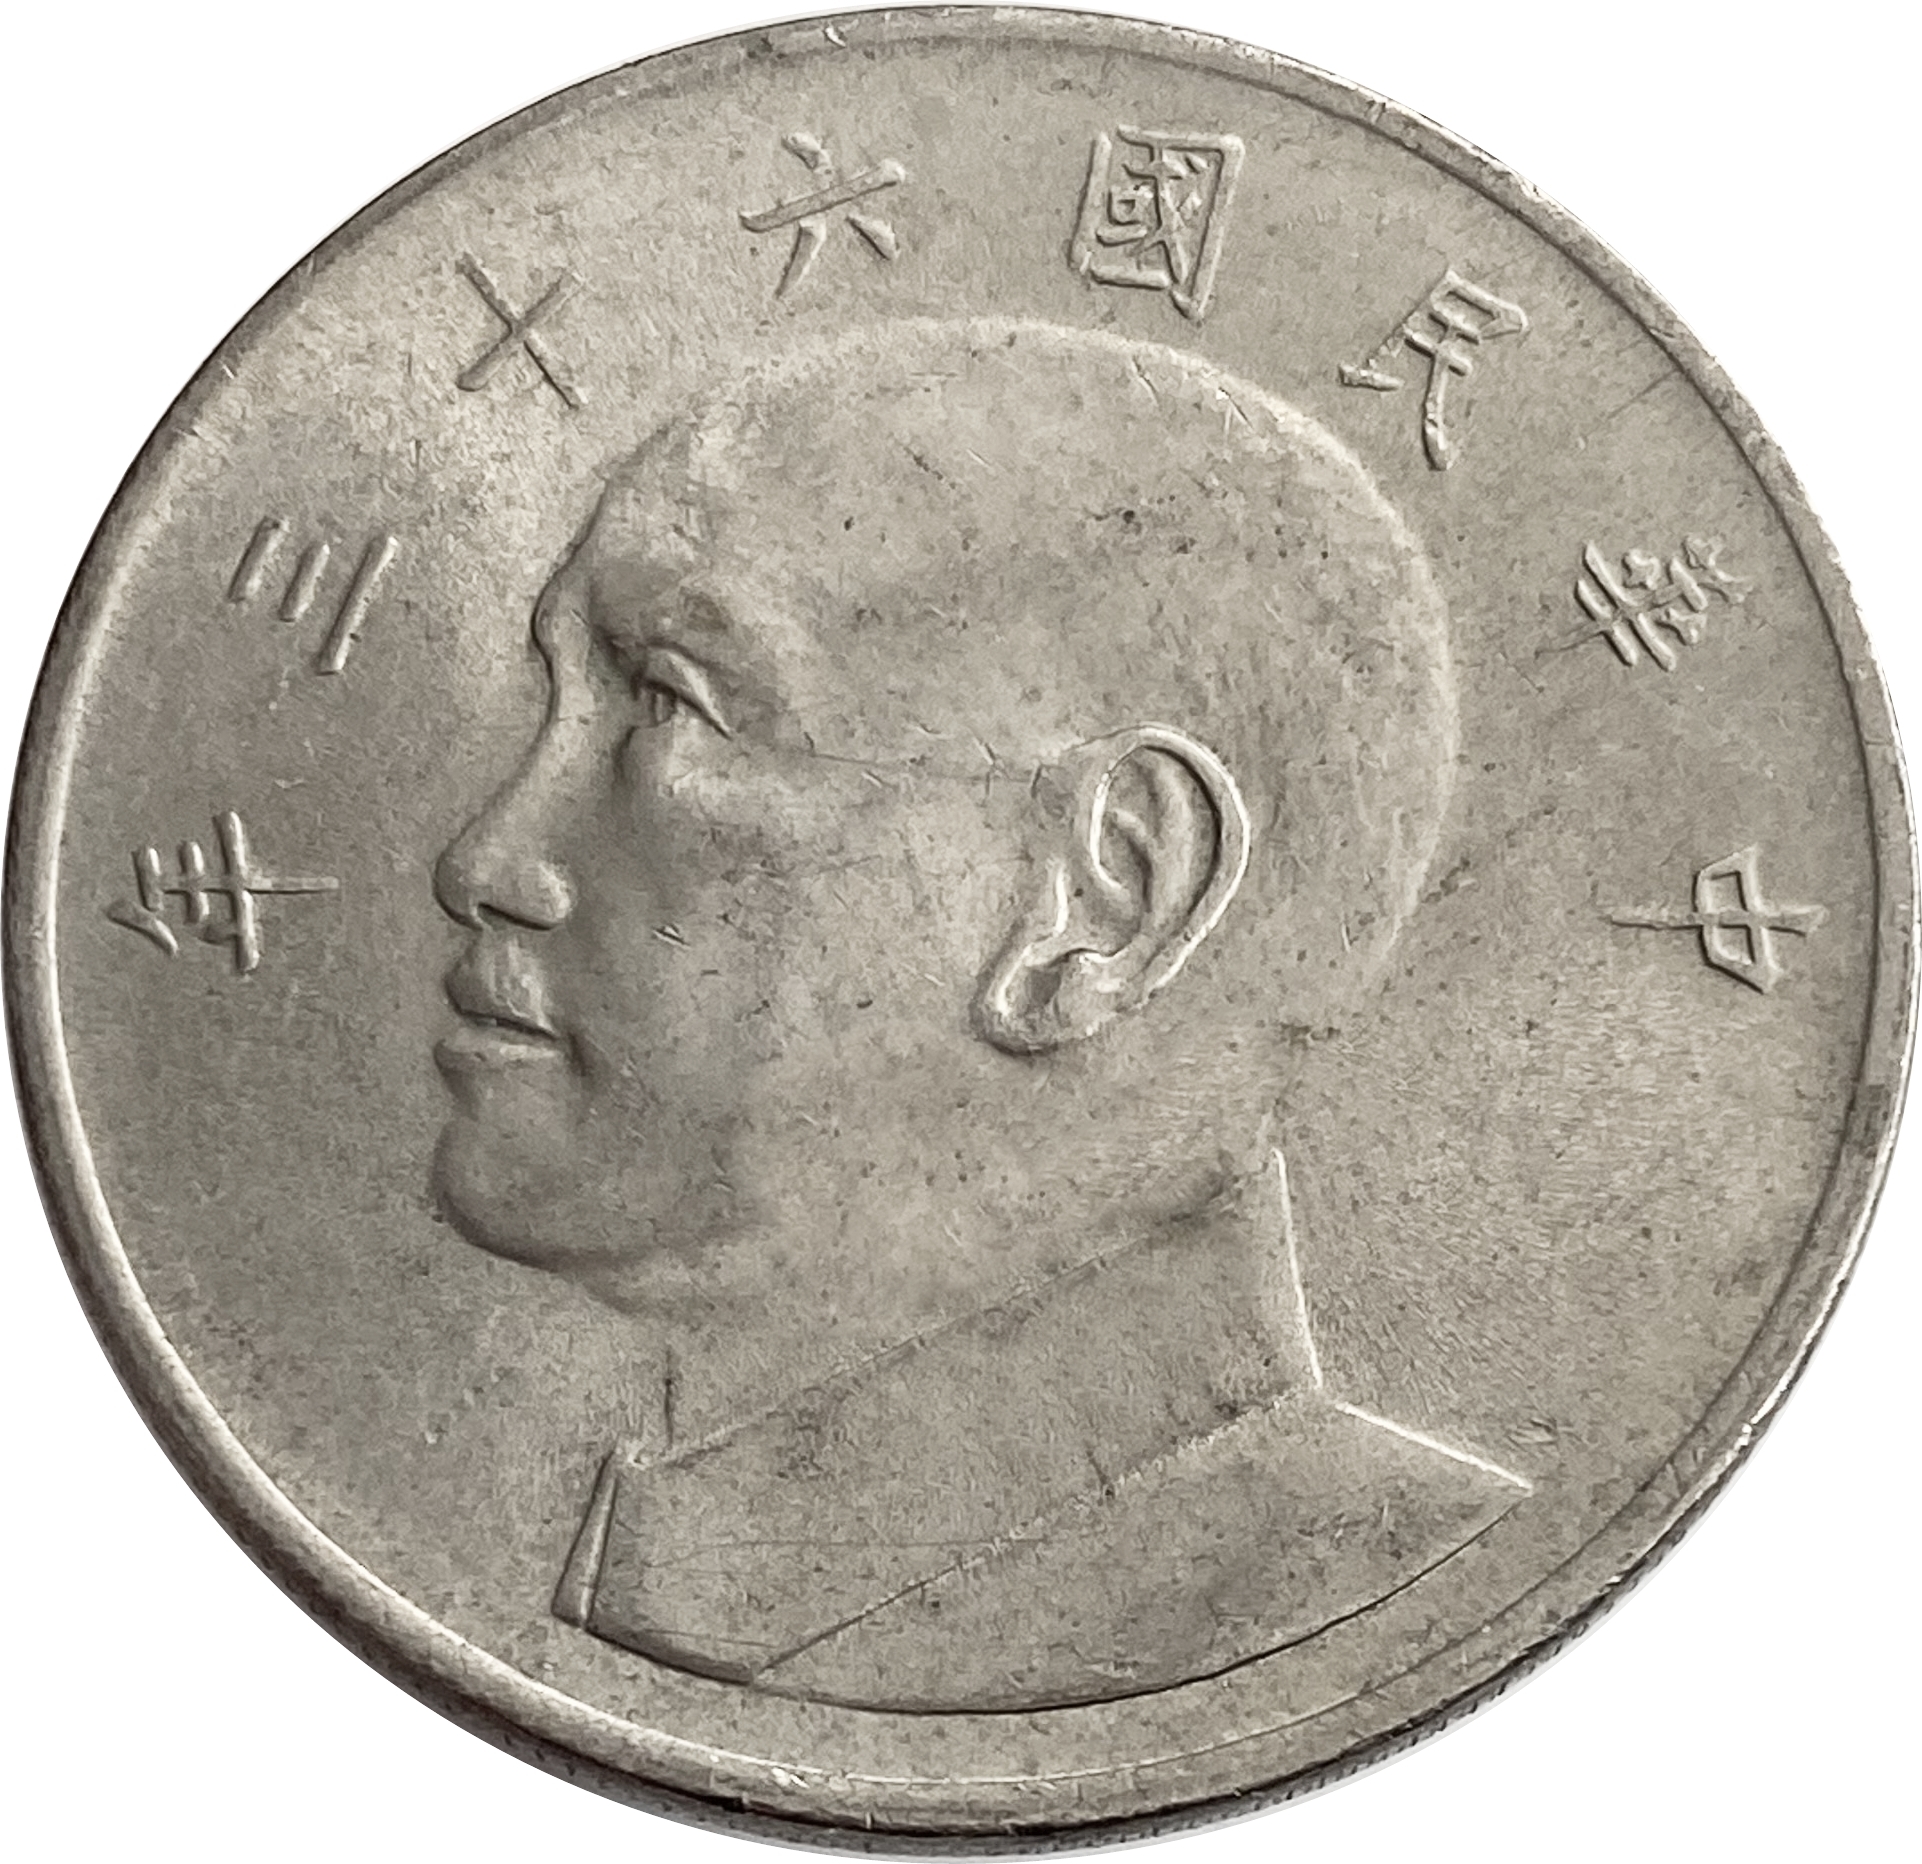 Доллар 1970 года. Монеты Тайваня. Наборы монет Тайваня.